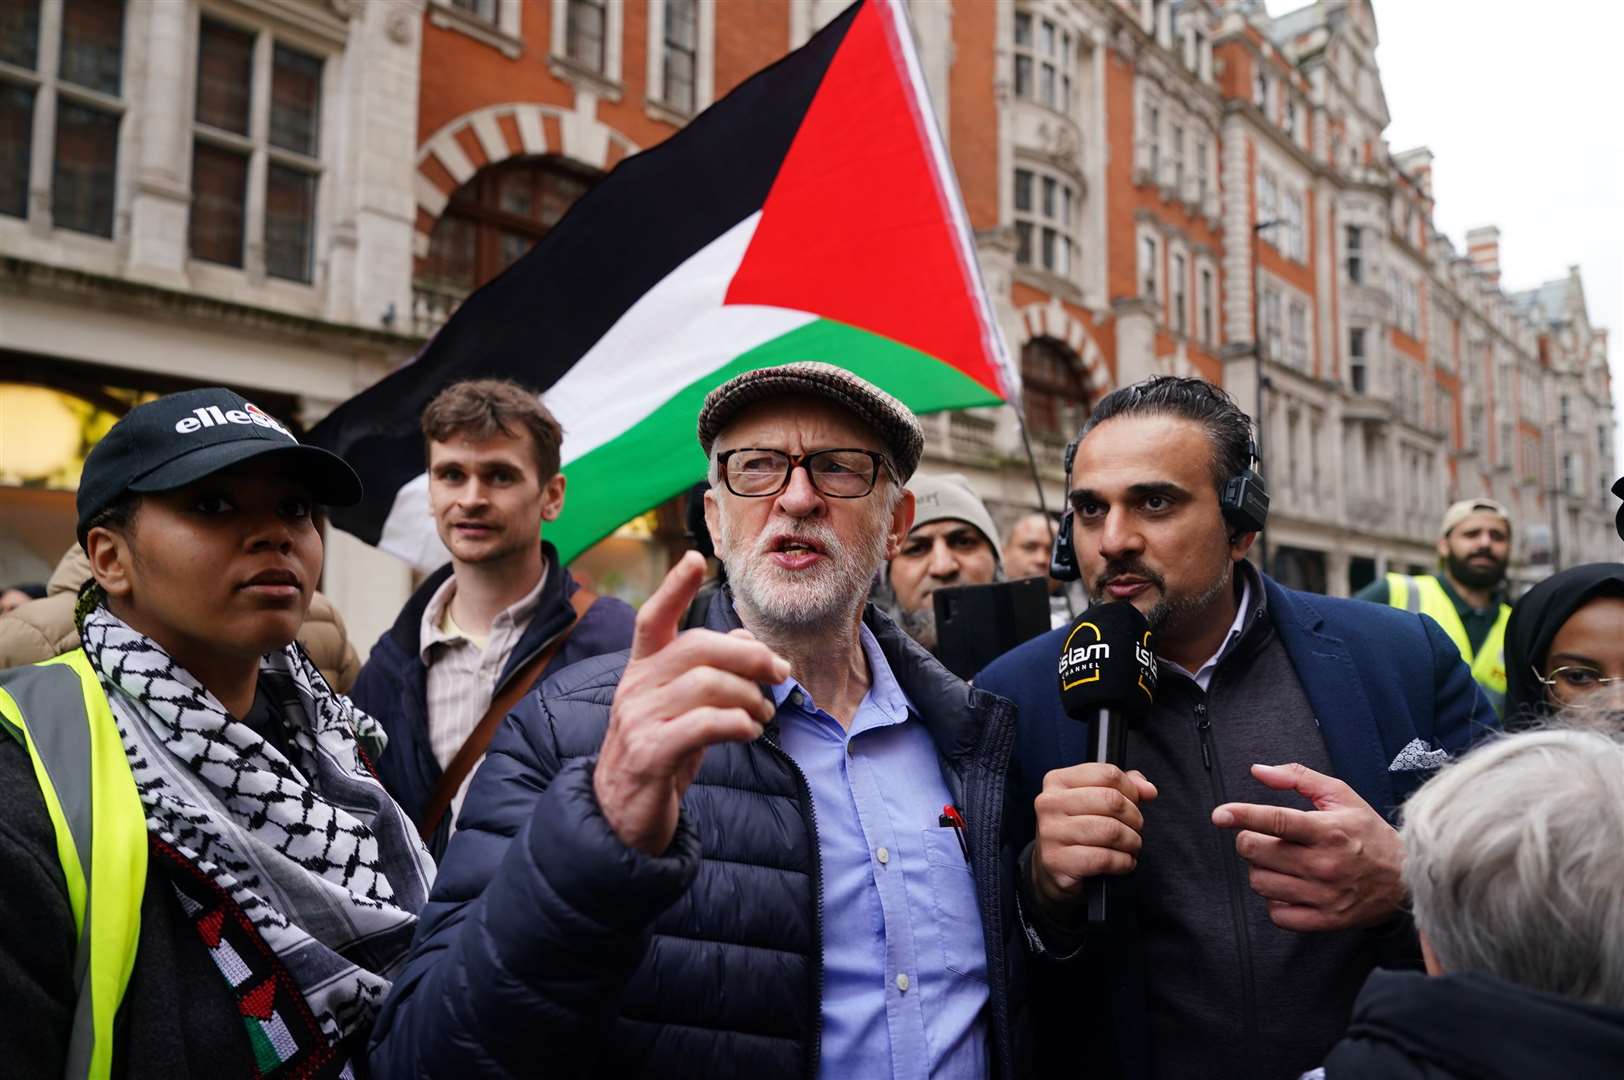 Former Labour Party leader Jeremy Corbyn takes part in a pro-Palestine march in central London (Jordan Pettitt/PA)